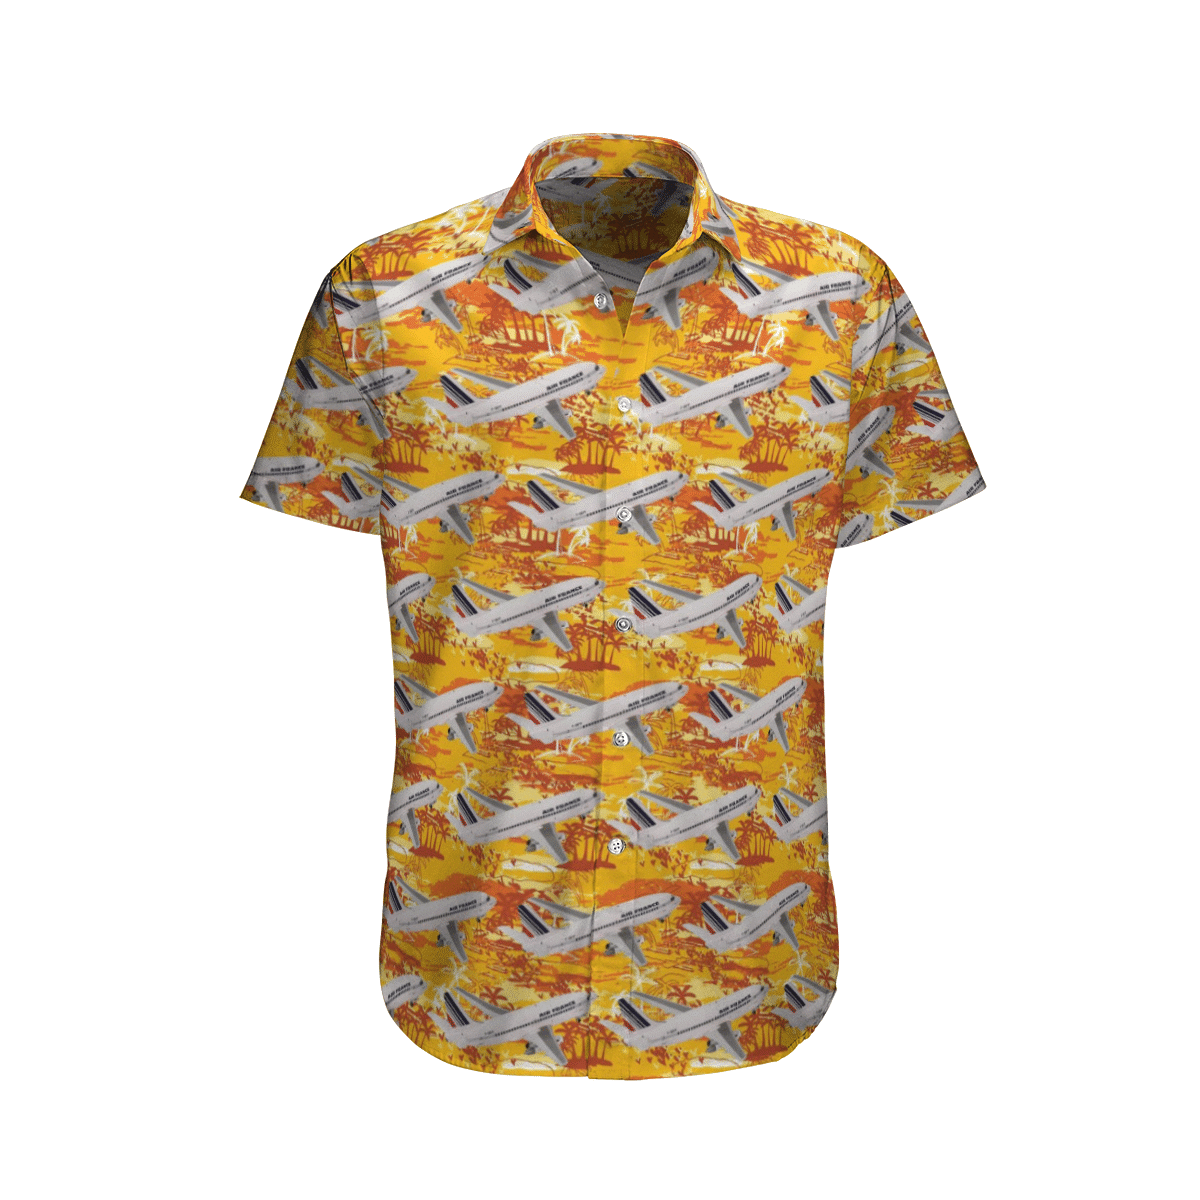 Get a new Hawaiian shirt to enjoy summer vacation 116